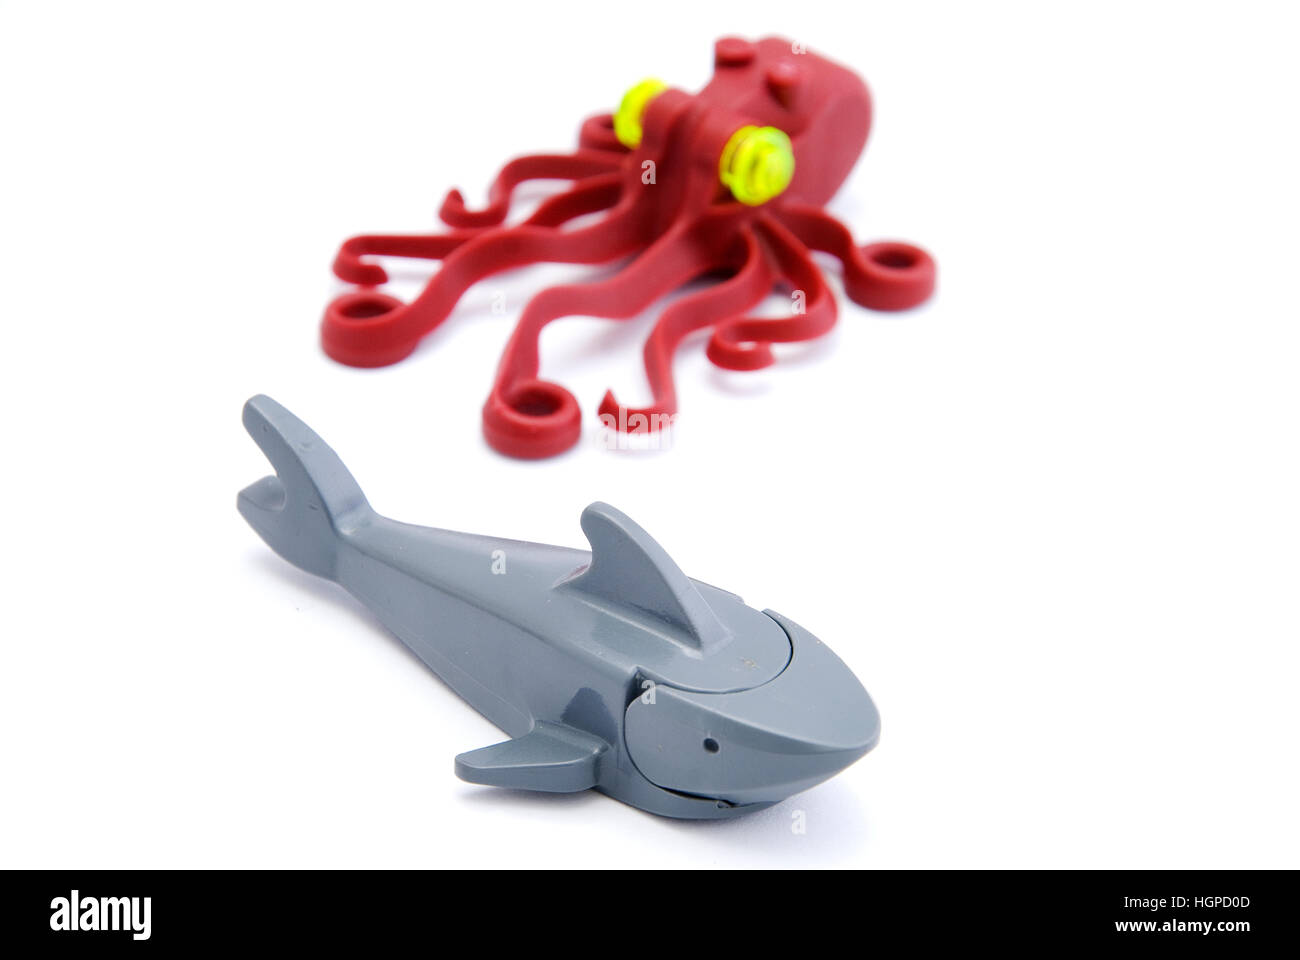 Lego Octopus and shark Stock Photo